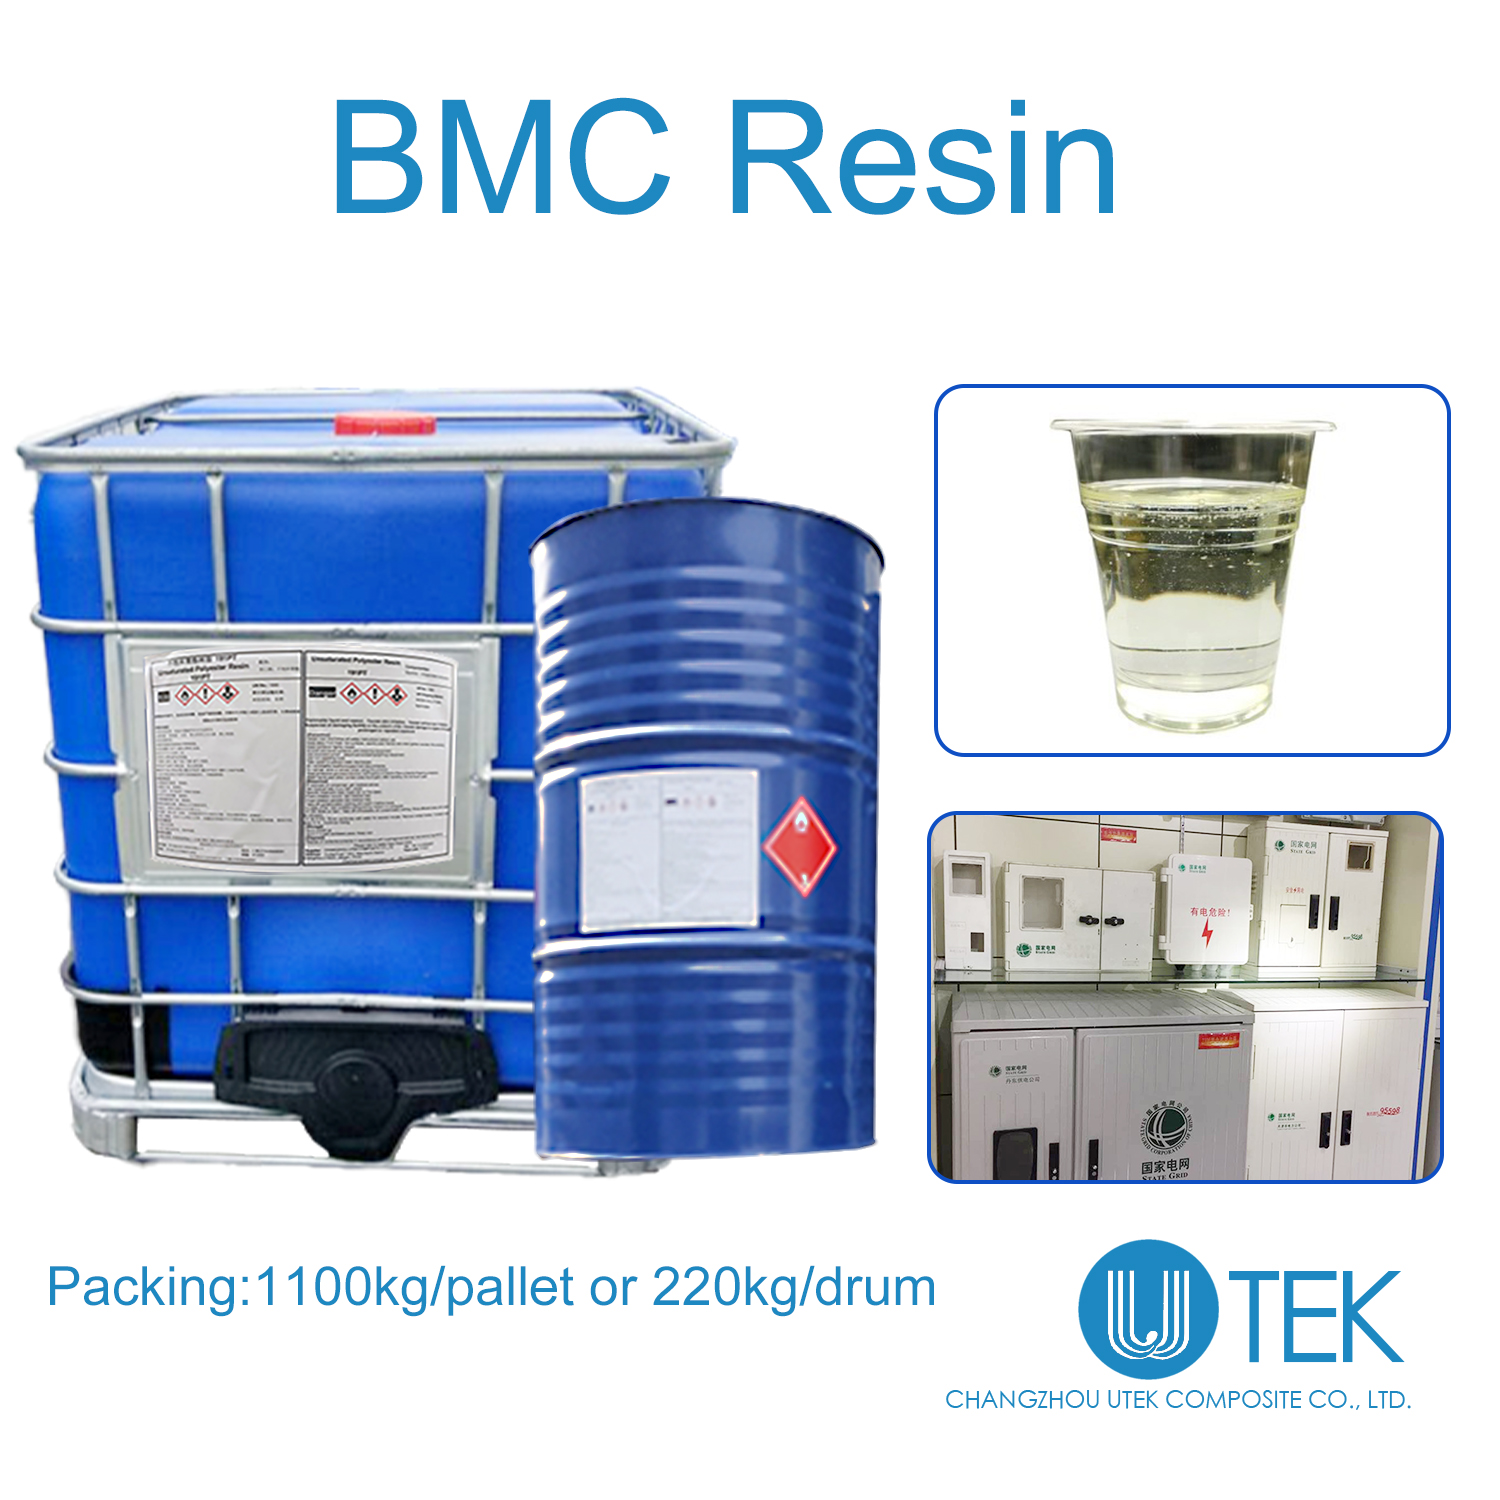 BMC Resin